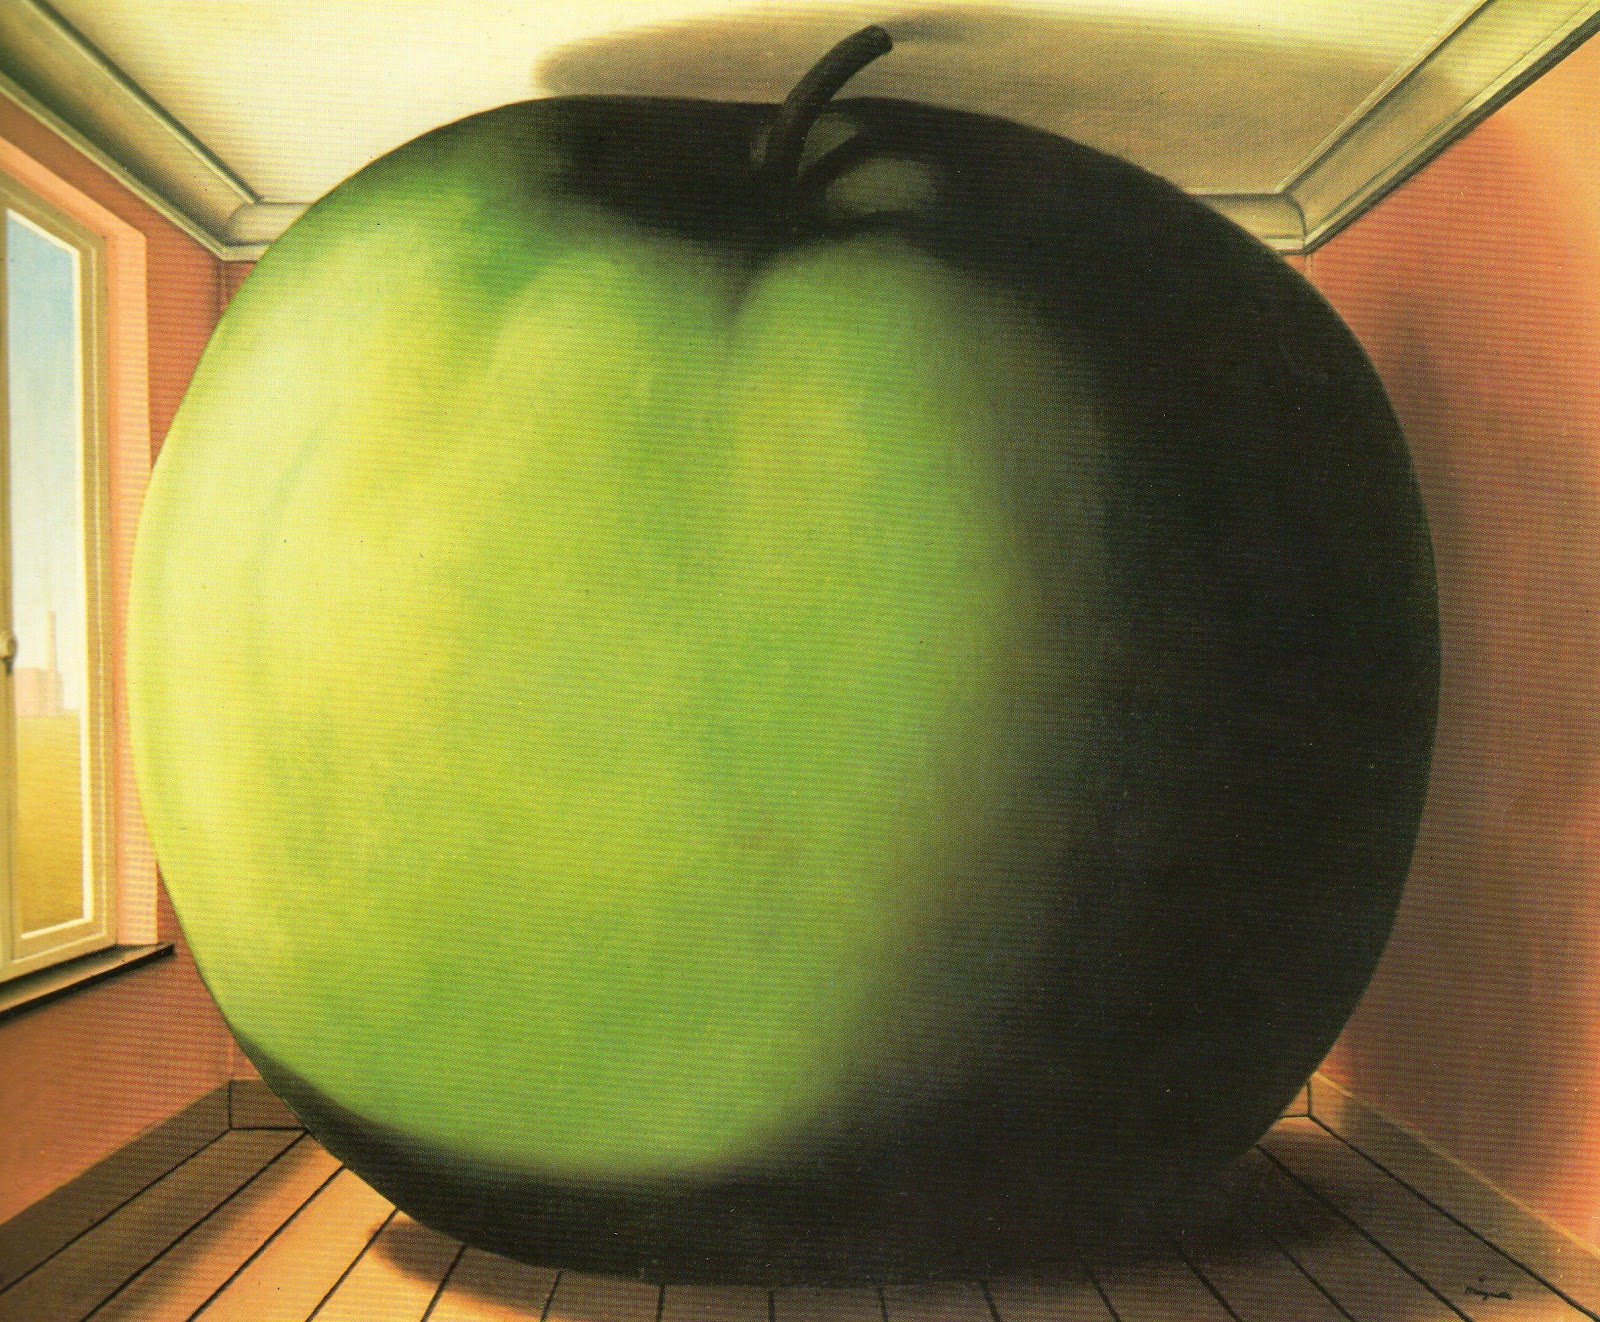 Что означает картина. Рене Магритт яблоко в комнате. Слуховая комната Рене Магритт. Зеленое яблоко Рене Магритта. Магритт комната.